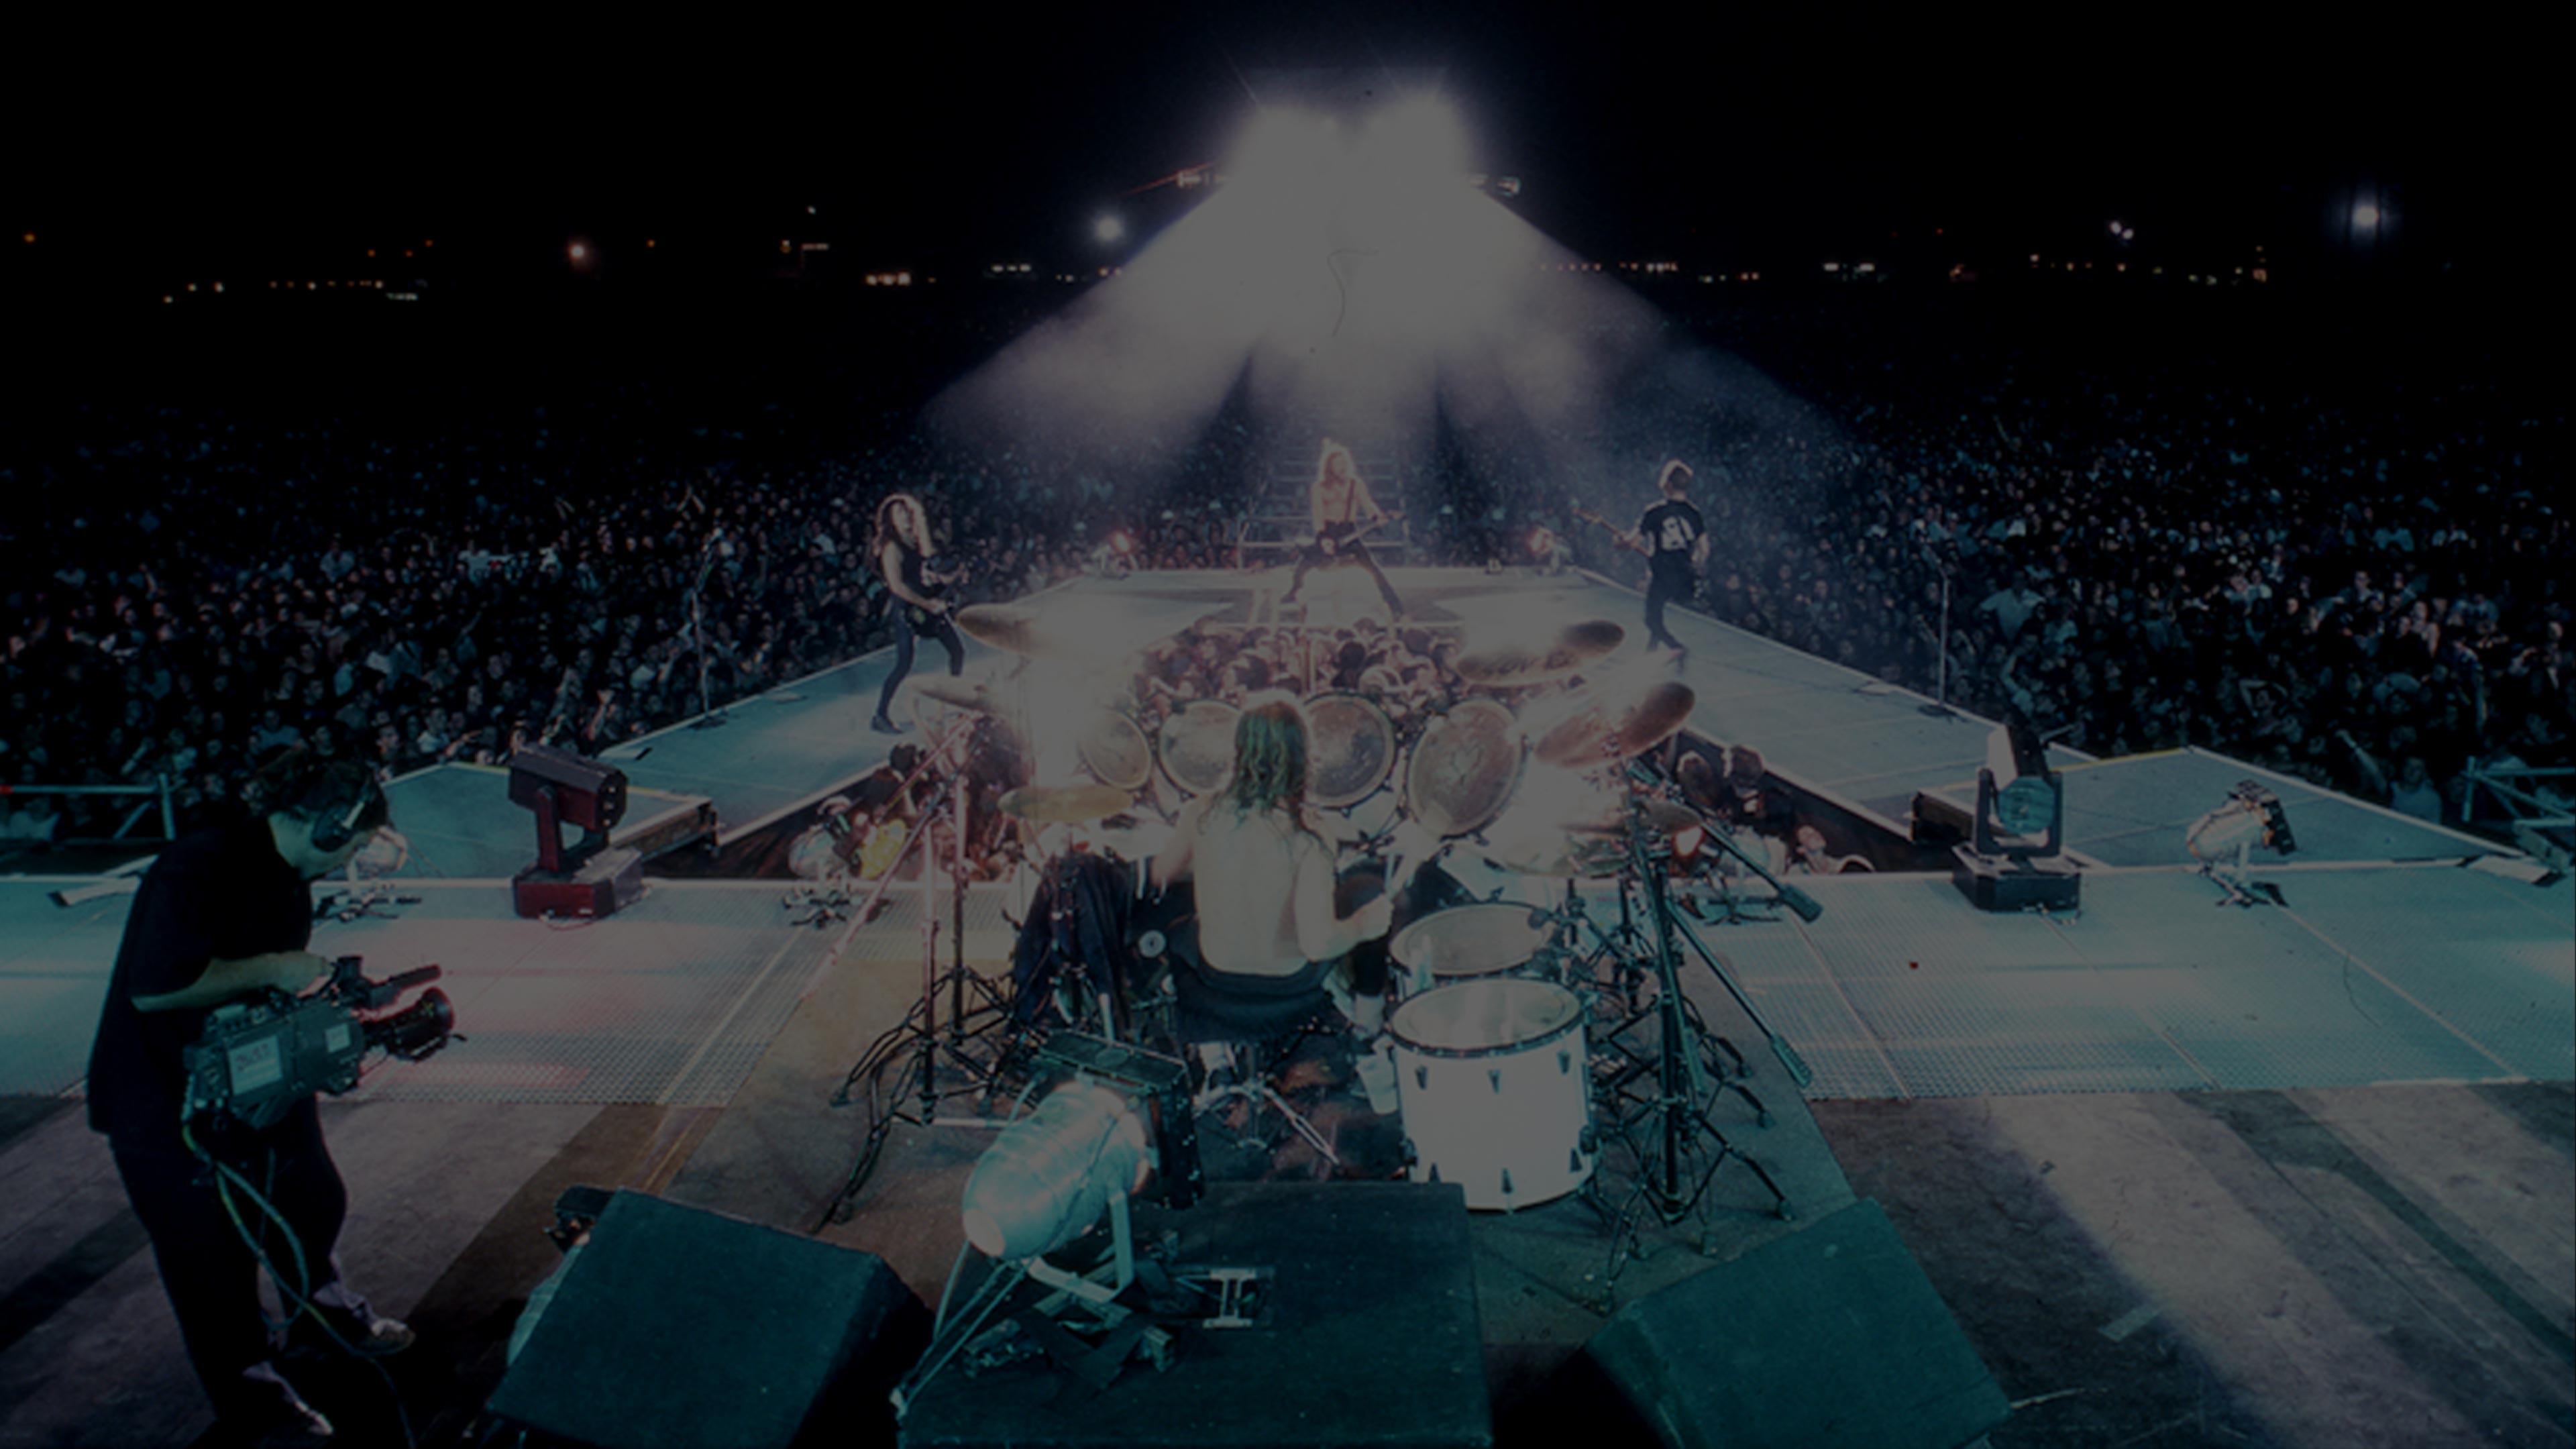 Metallica at Stadio delle Alpi in Turin, Italy on June 22, 1993